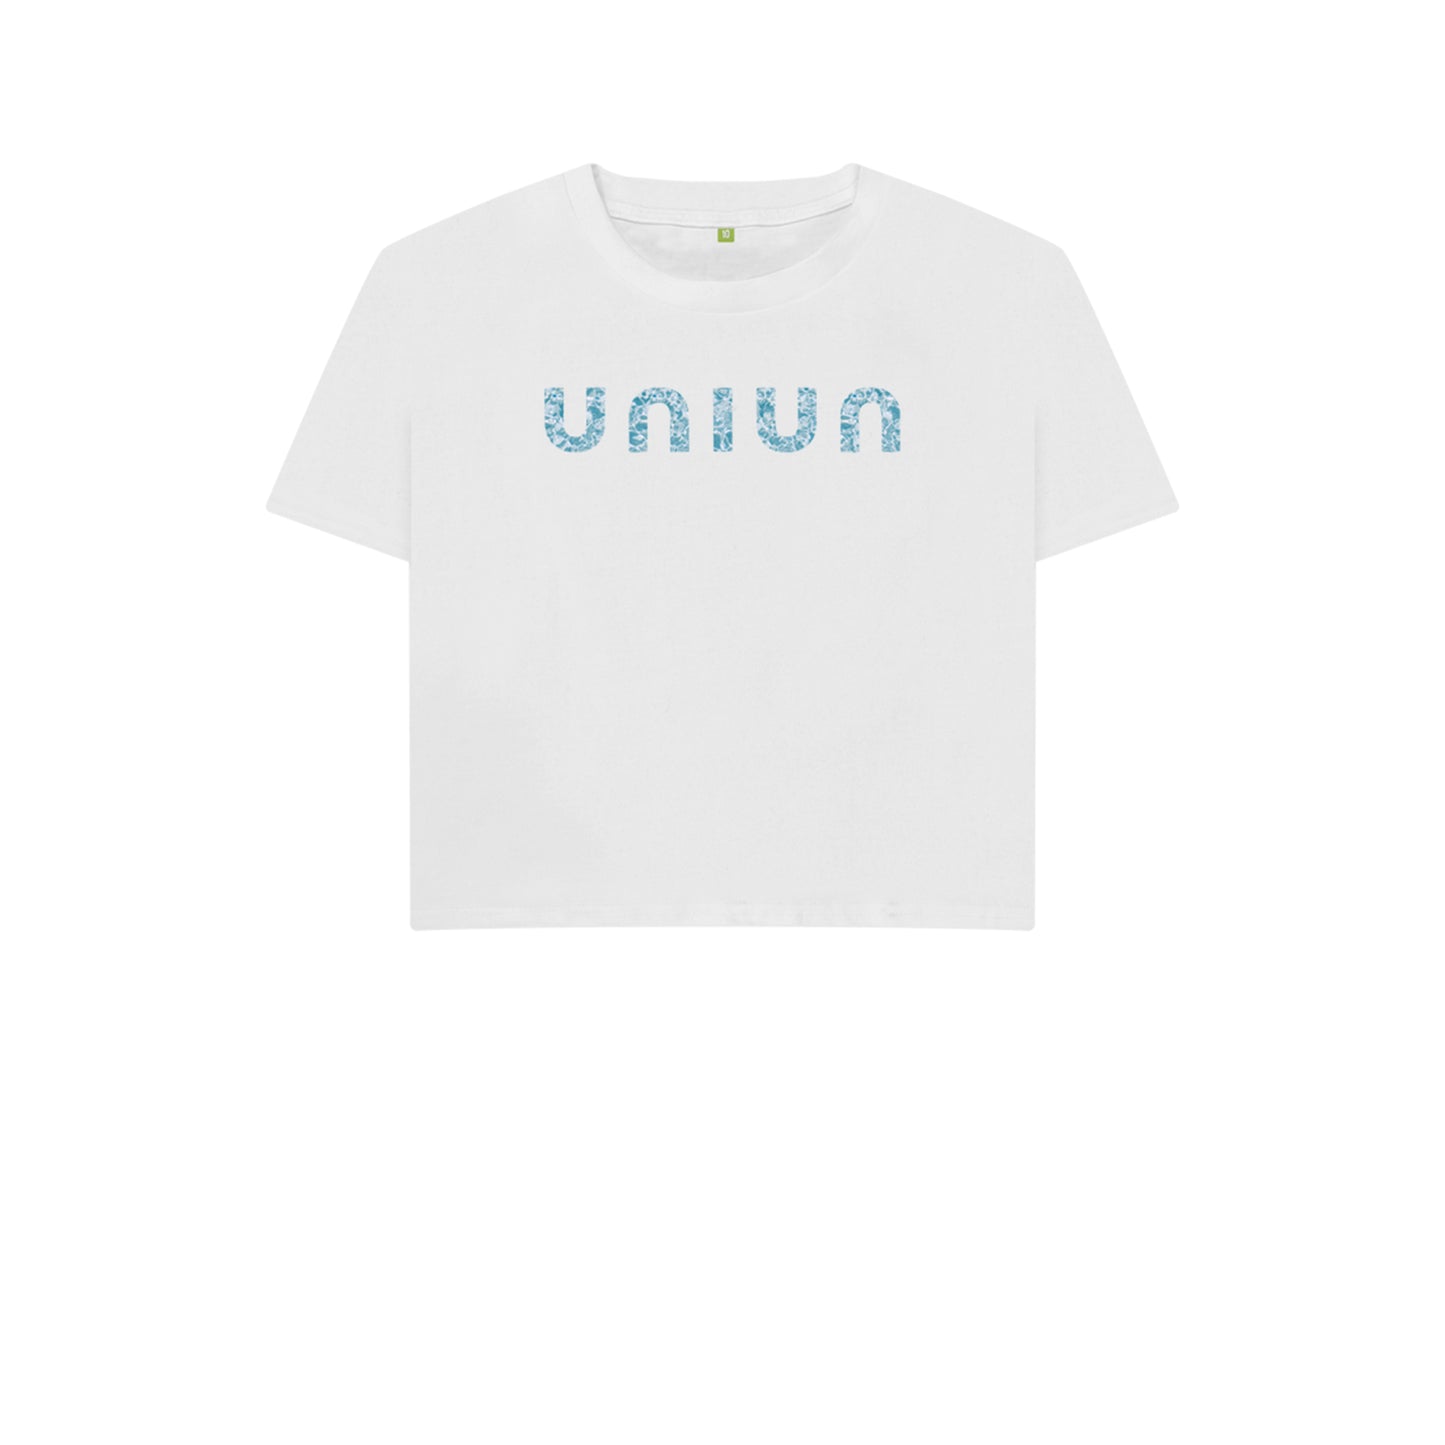 UNIUN Aqua Logo Crop White T-shirt